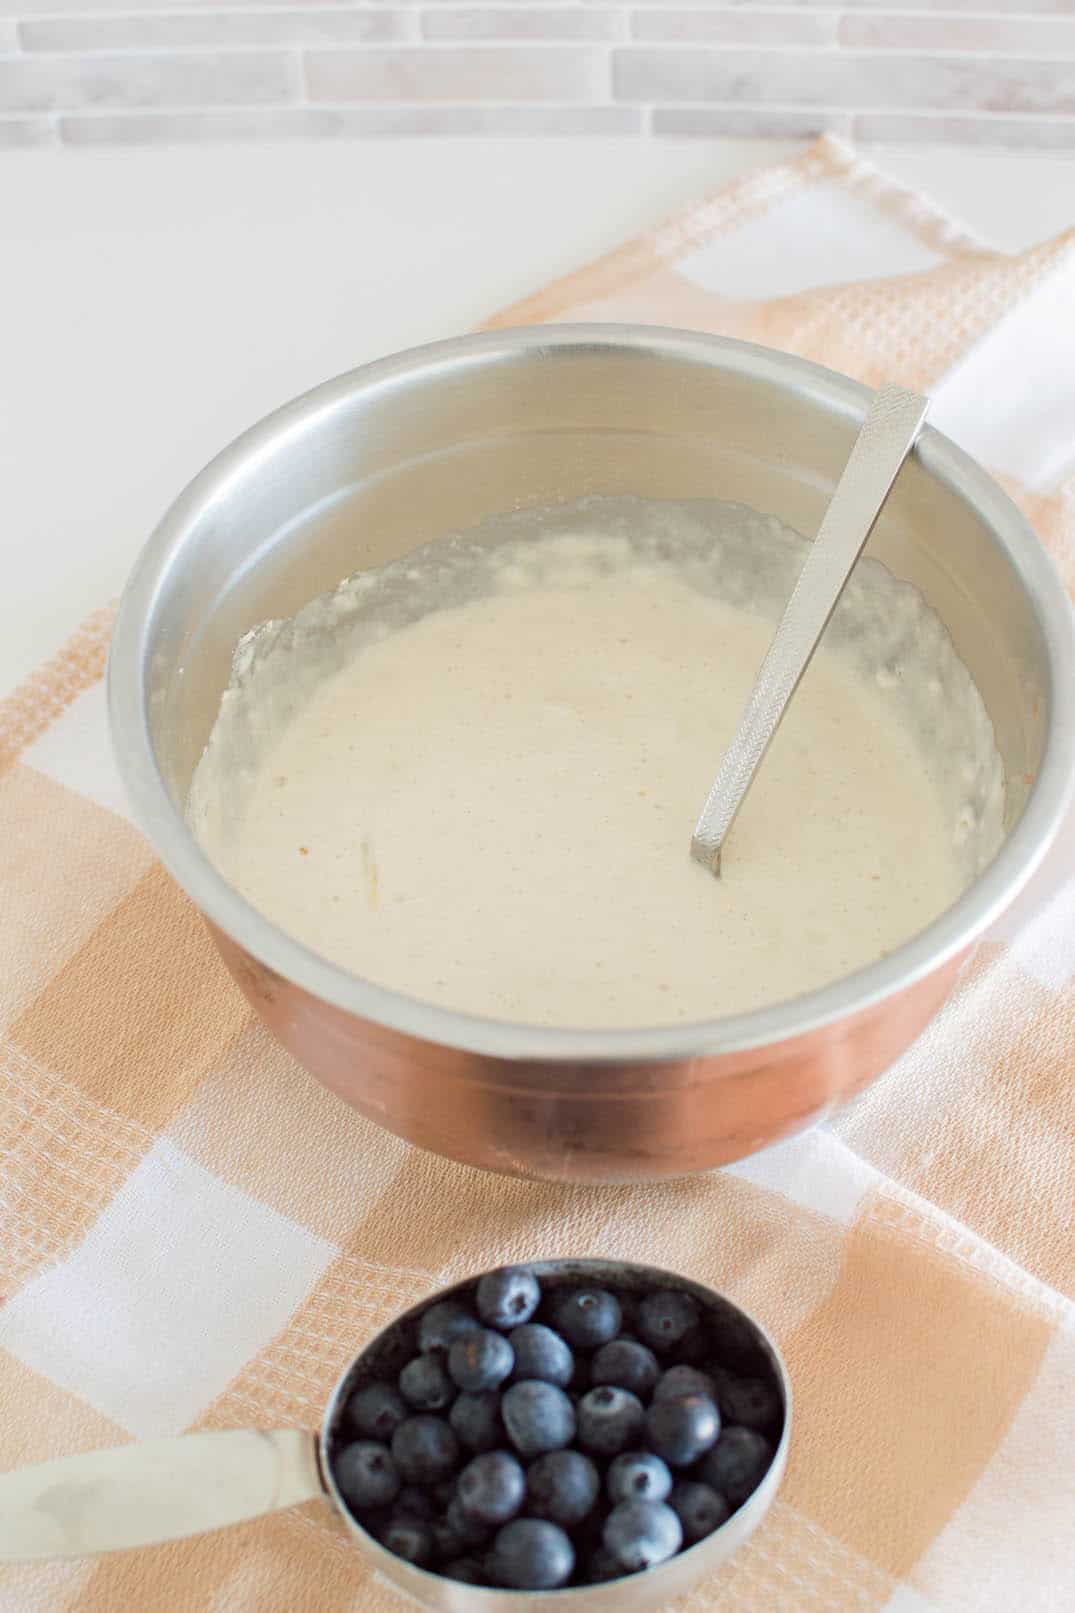 Mixing batter for pancakes